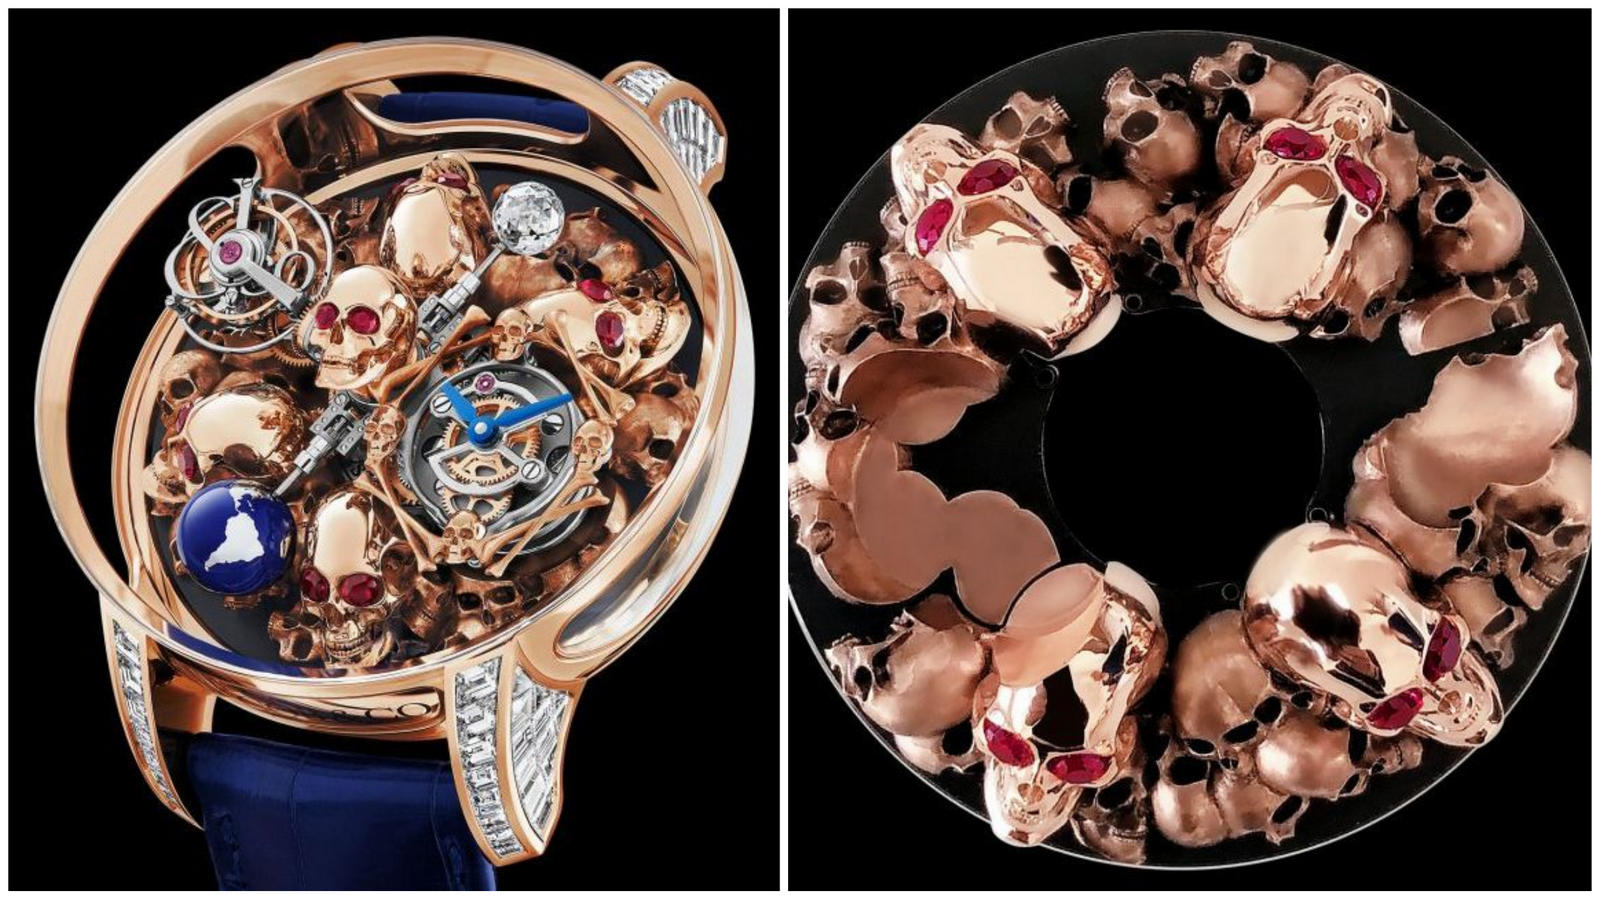 The new $800,000 Jacob & Co. Astronomia 4 Skulls timepiece has a